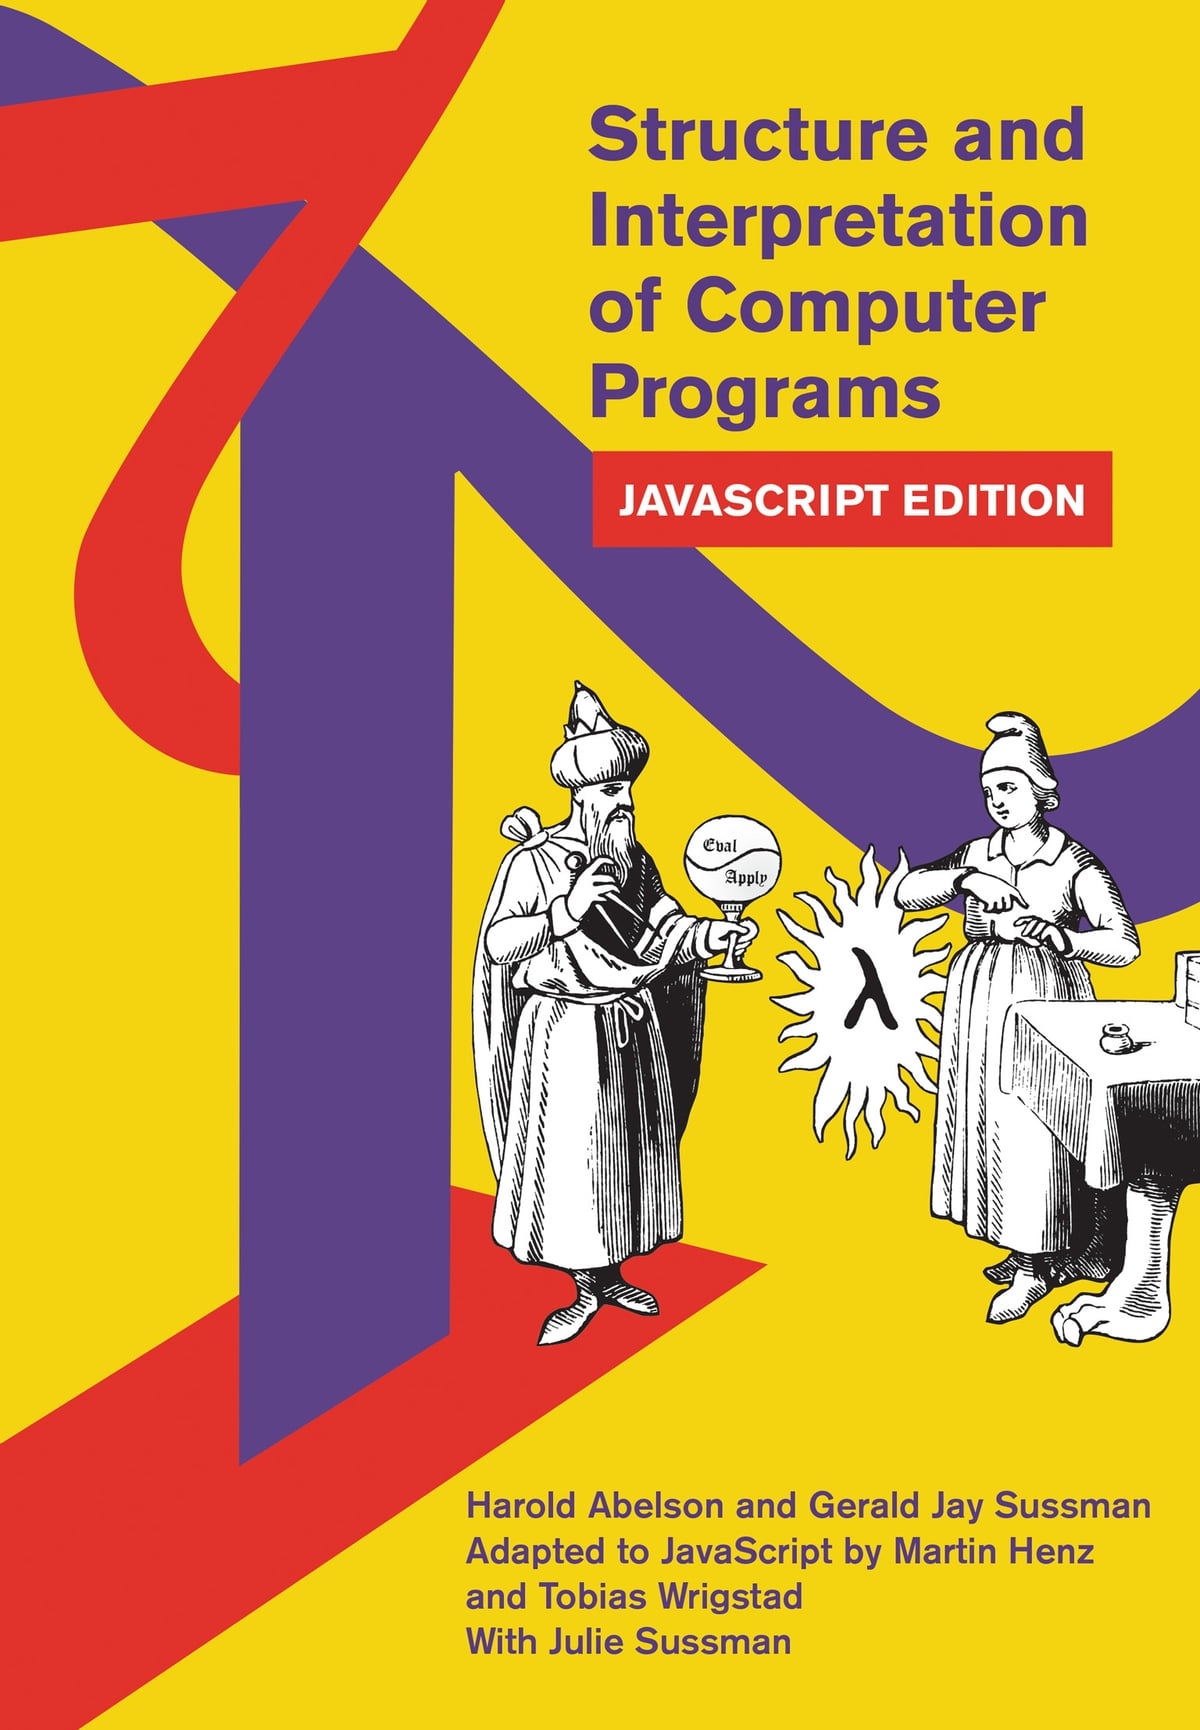 SICP book JavaScript 2022